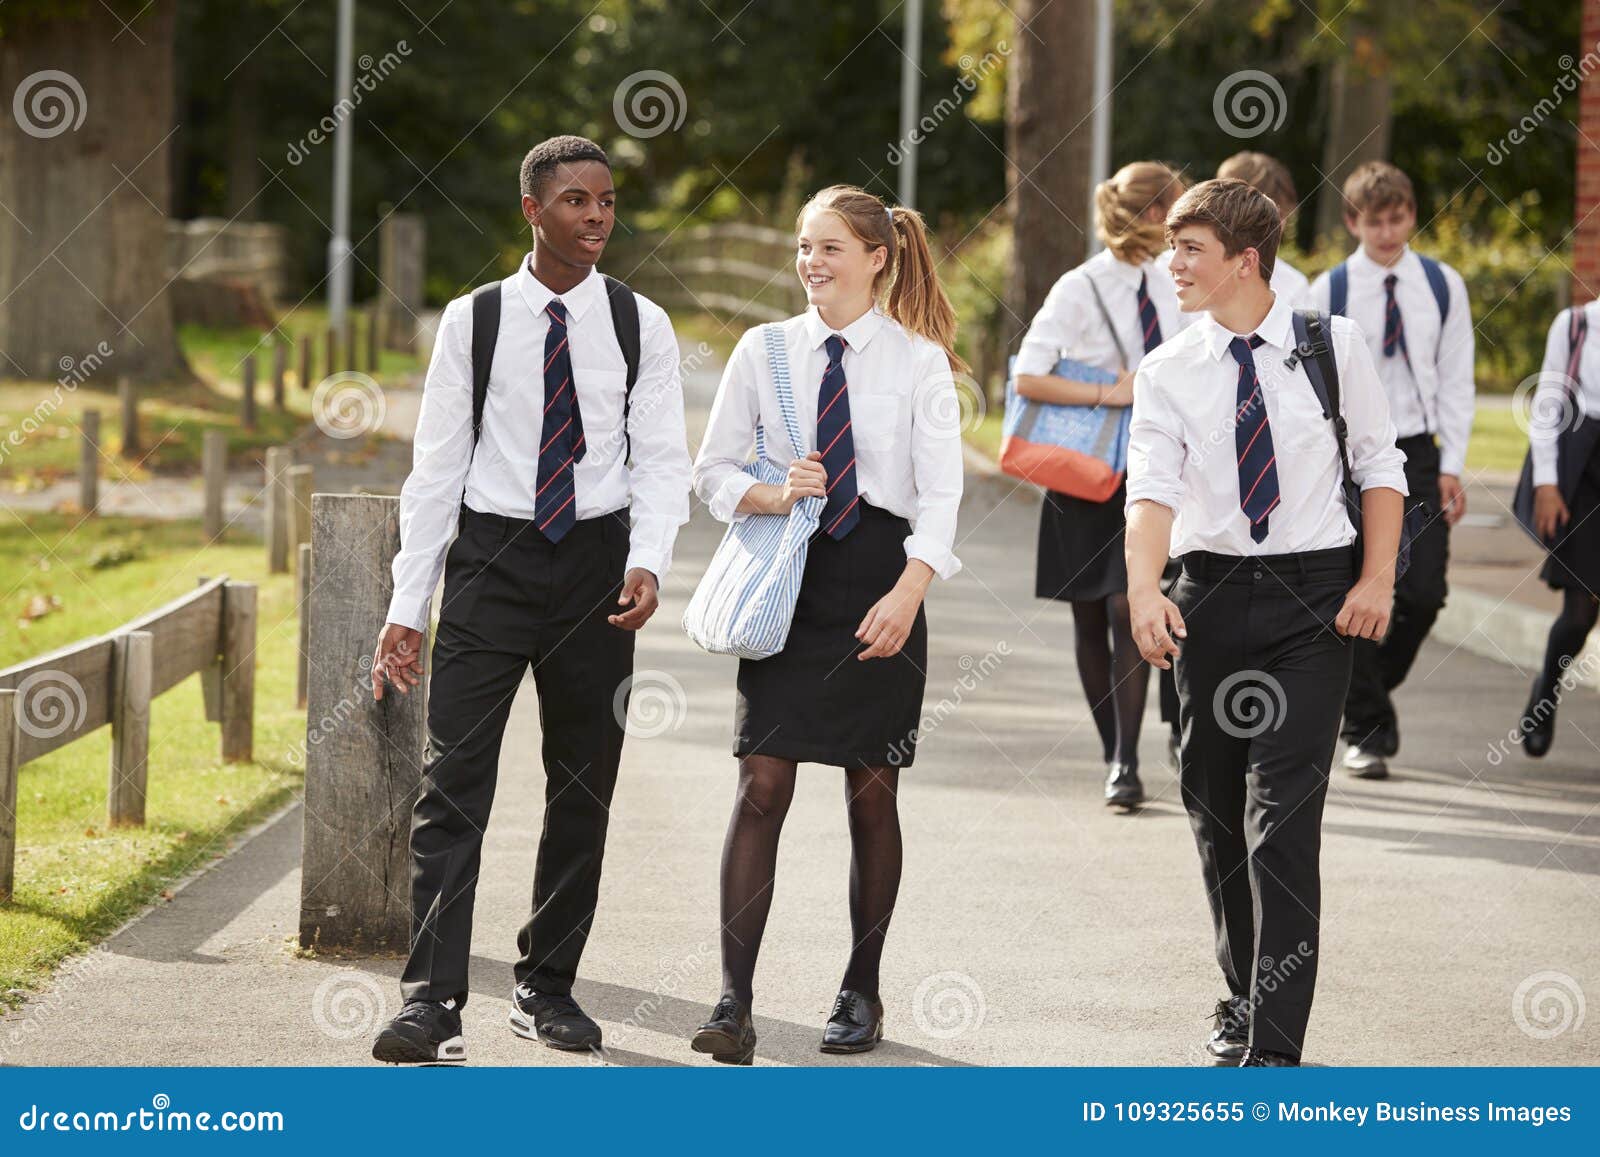 group of teenage students in uniform outside school buildings